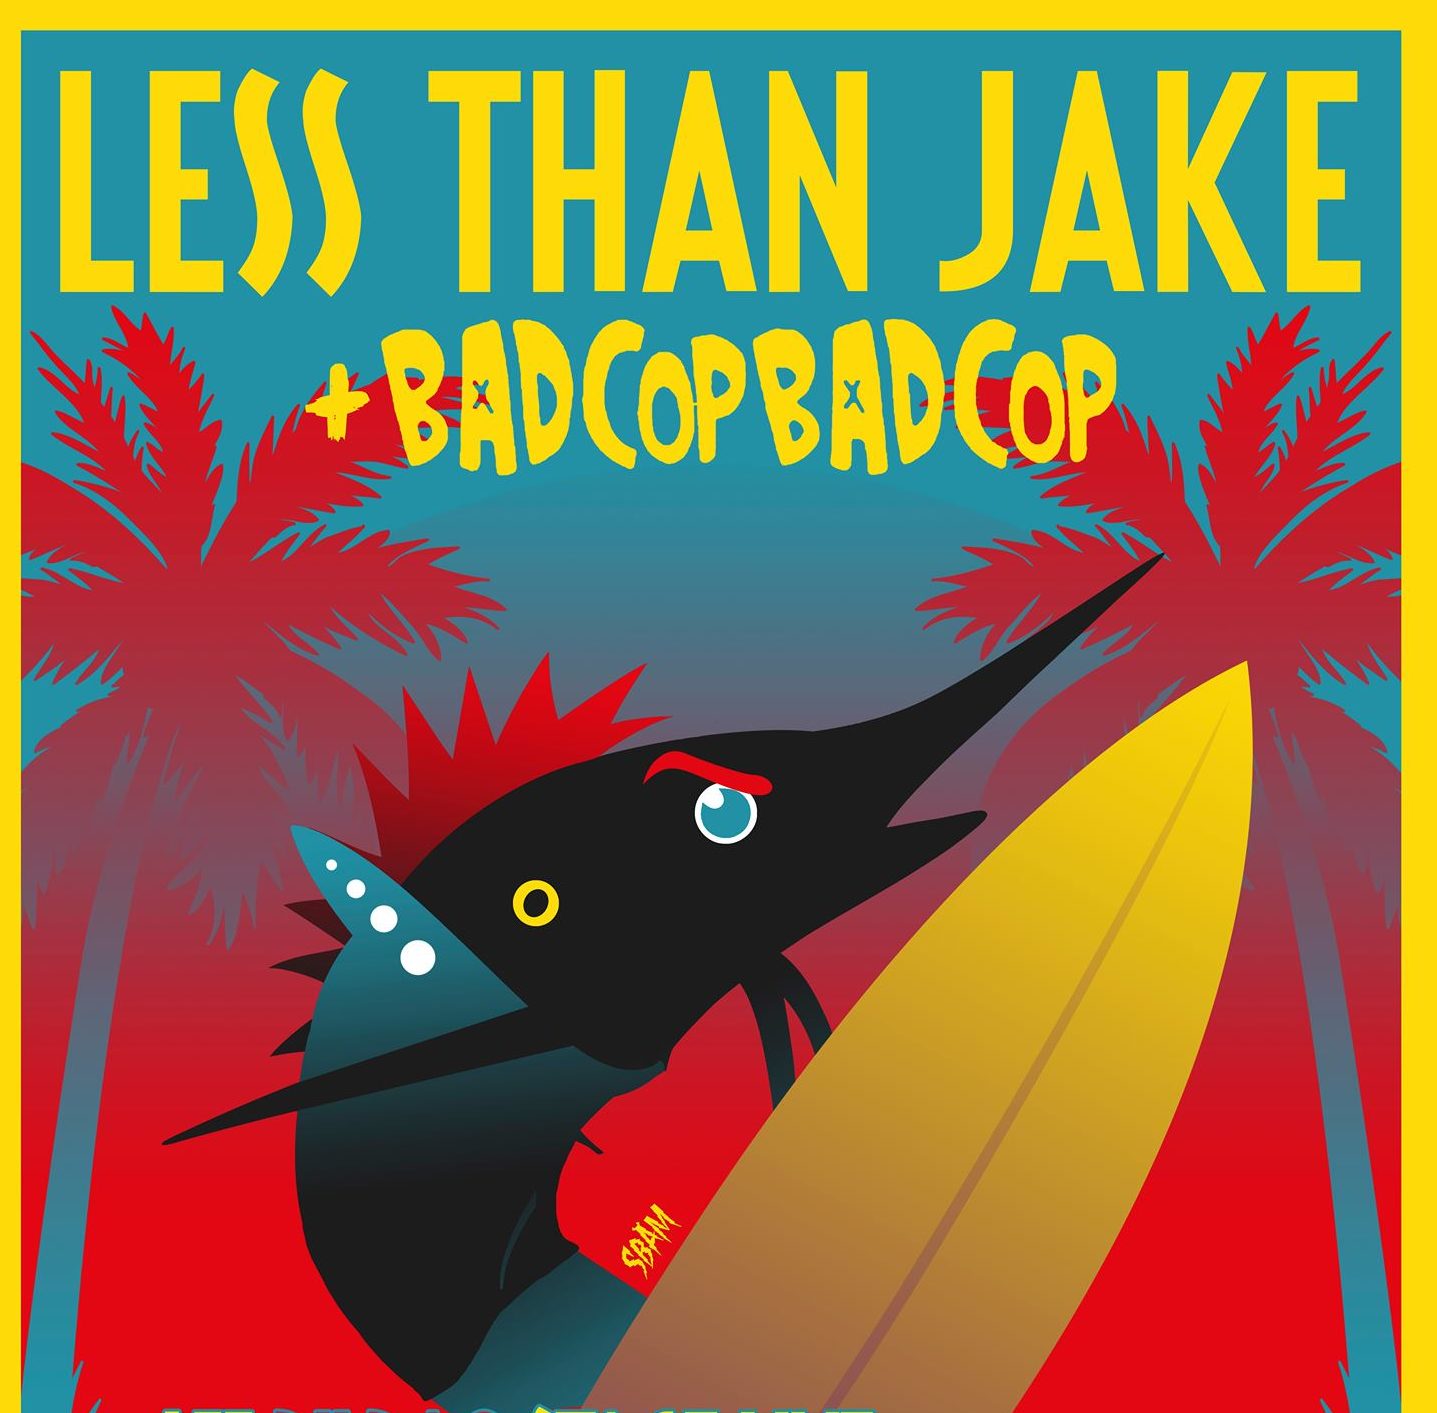 Less Than Jake presentan fechas en España junto a Bad Cop / Bad Cop